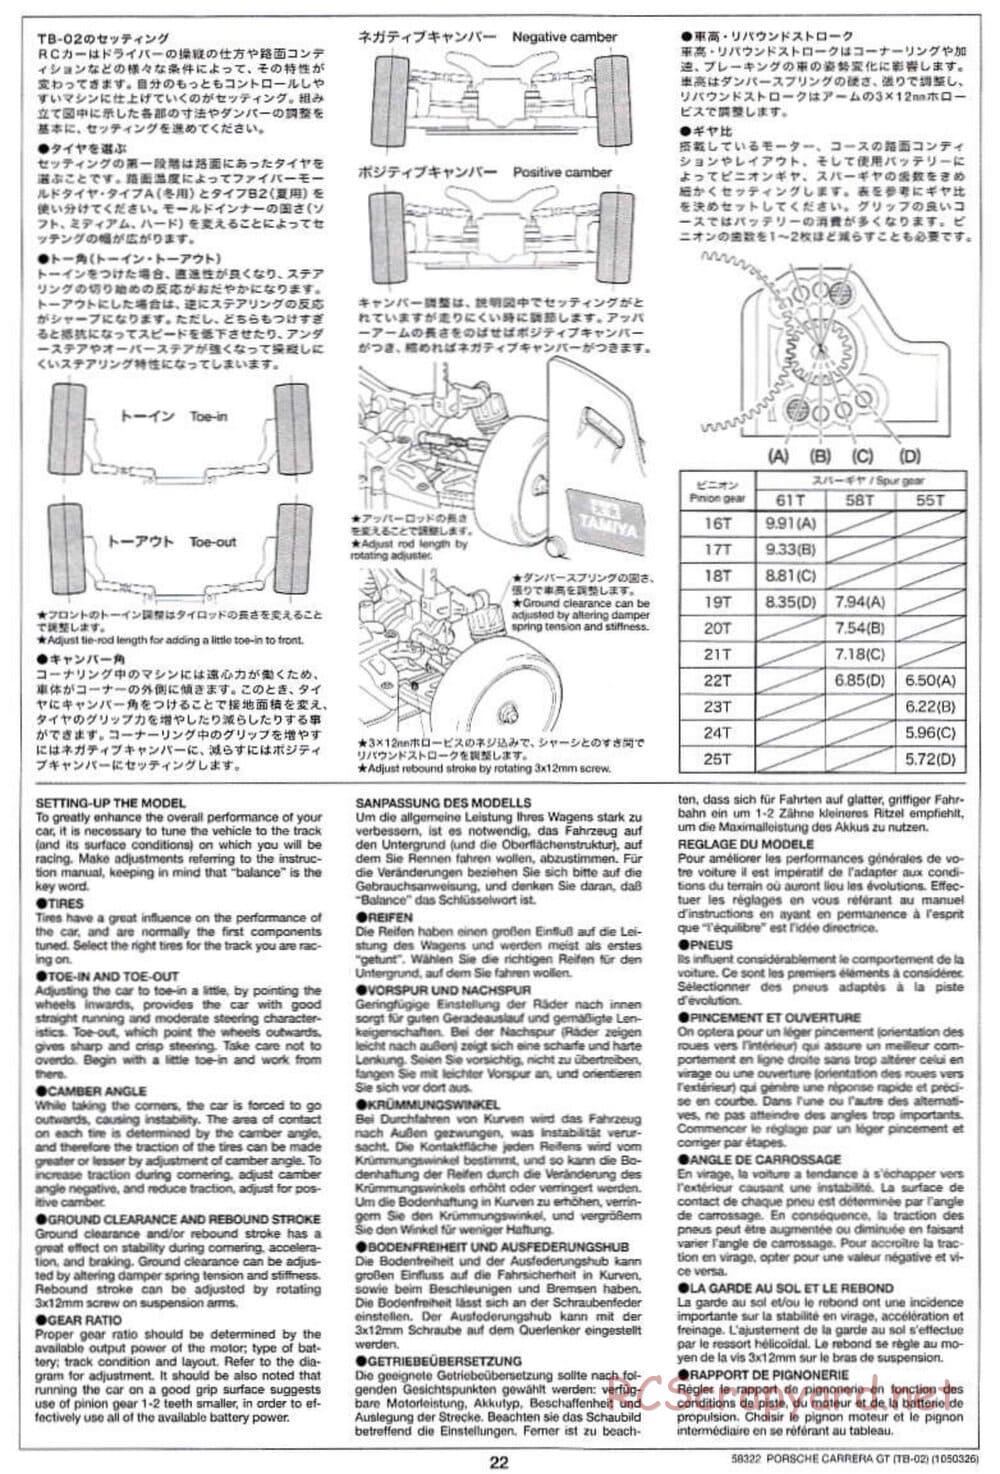 Tamiya - Porsche Carrera GT - TB-02 Chassis - Manual - Page 22